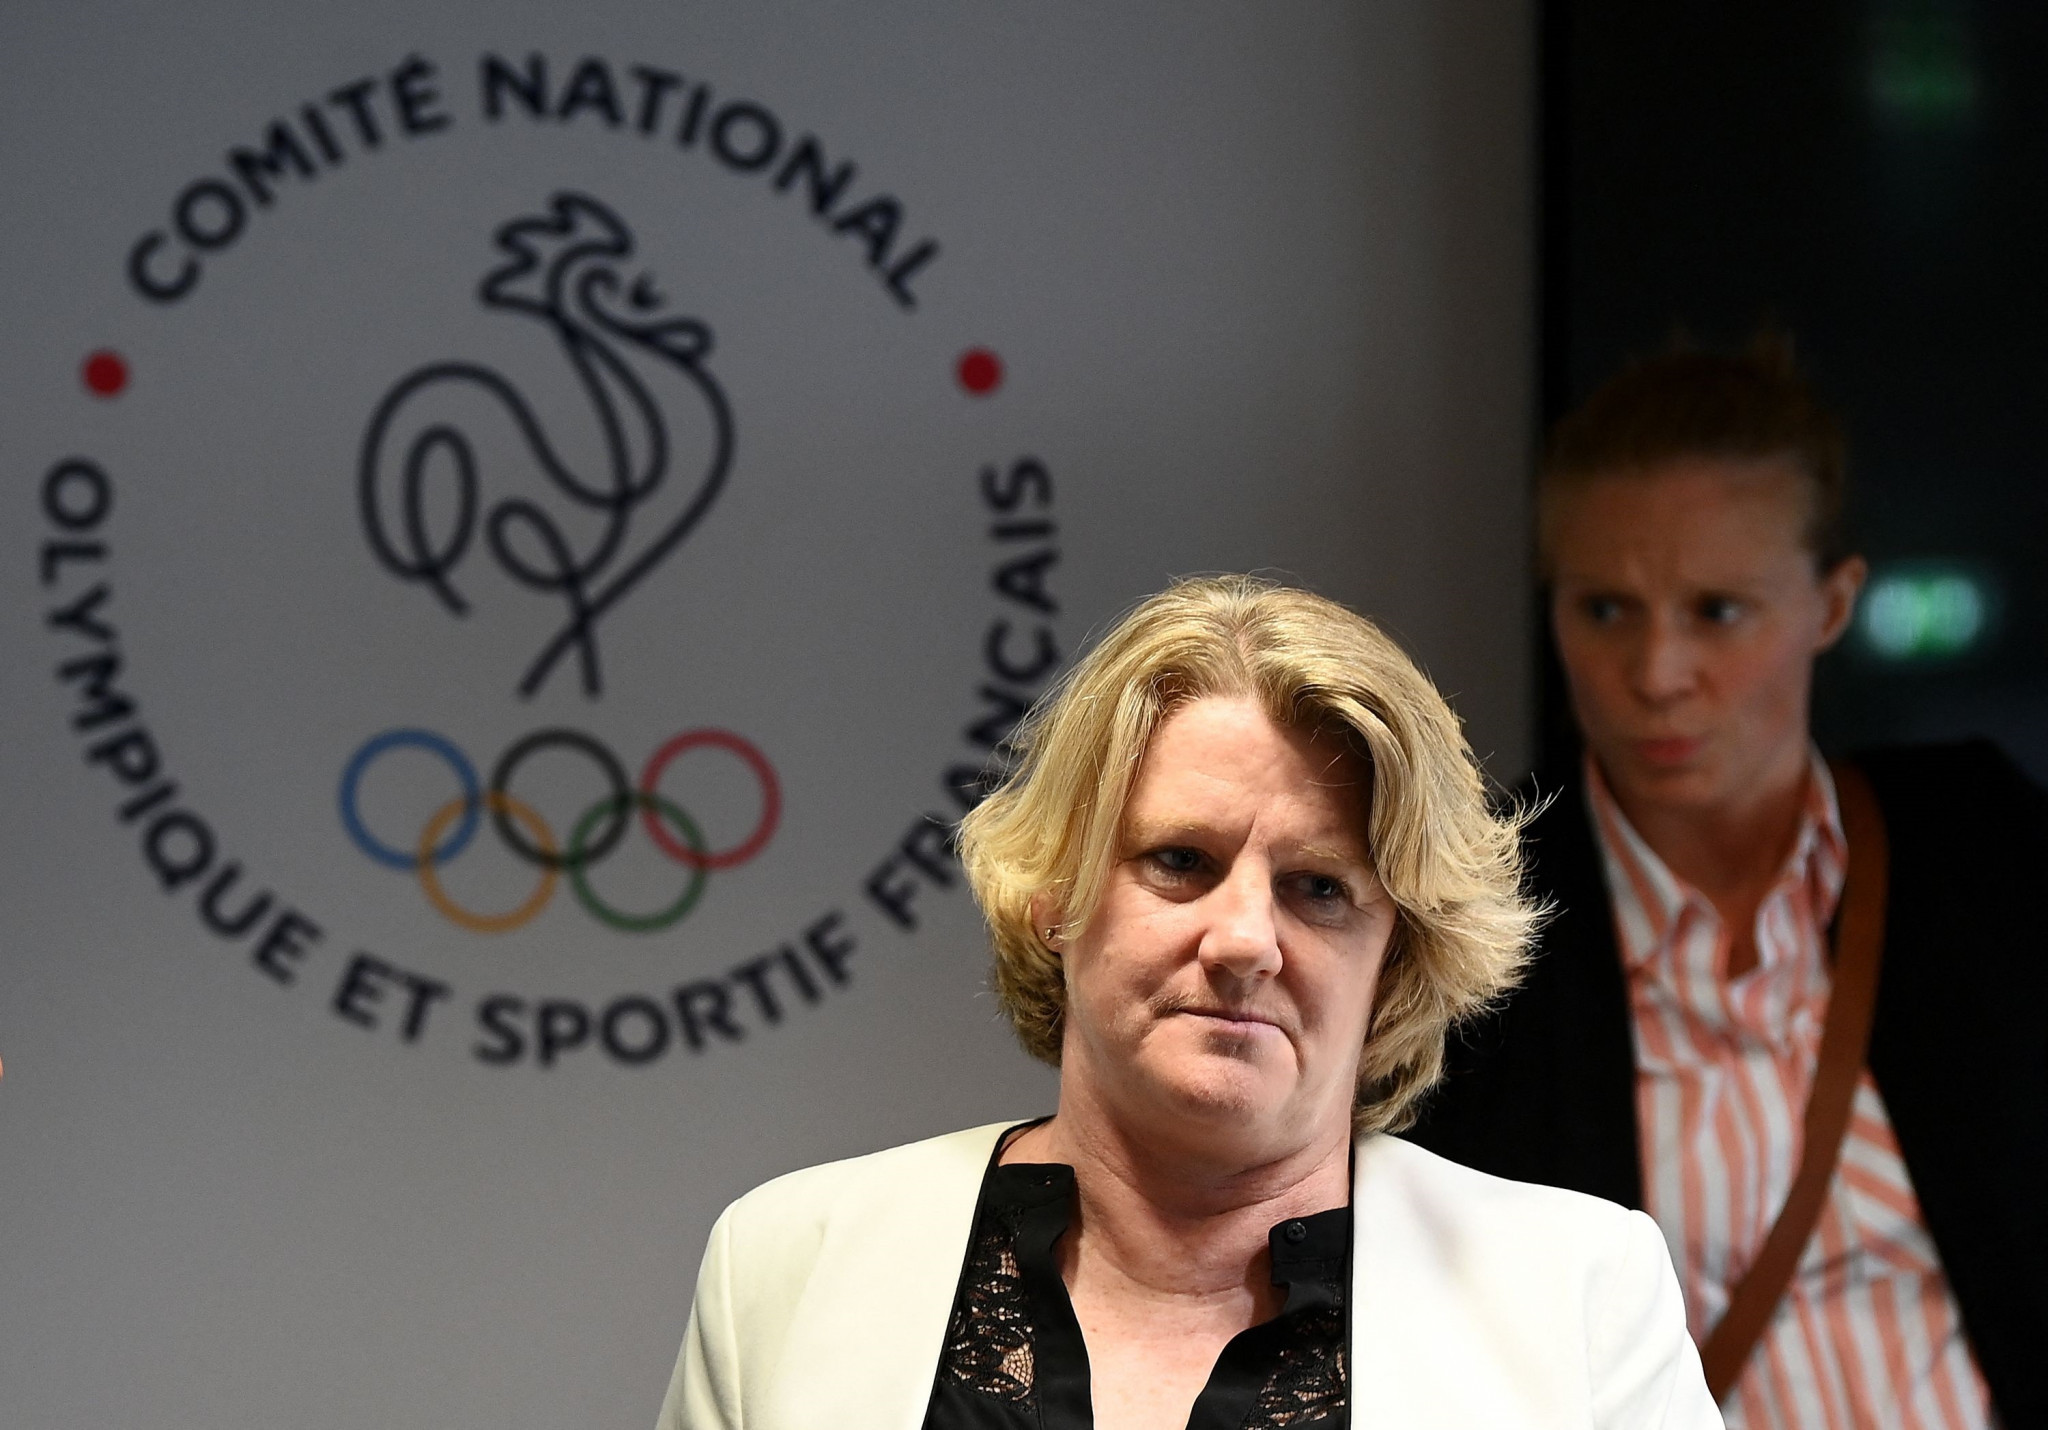 A public dispute has emerged between CNOSF President Brigitte Henriques and her predecessor Denis Masseglia ©Getty Images